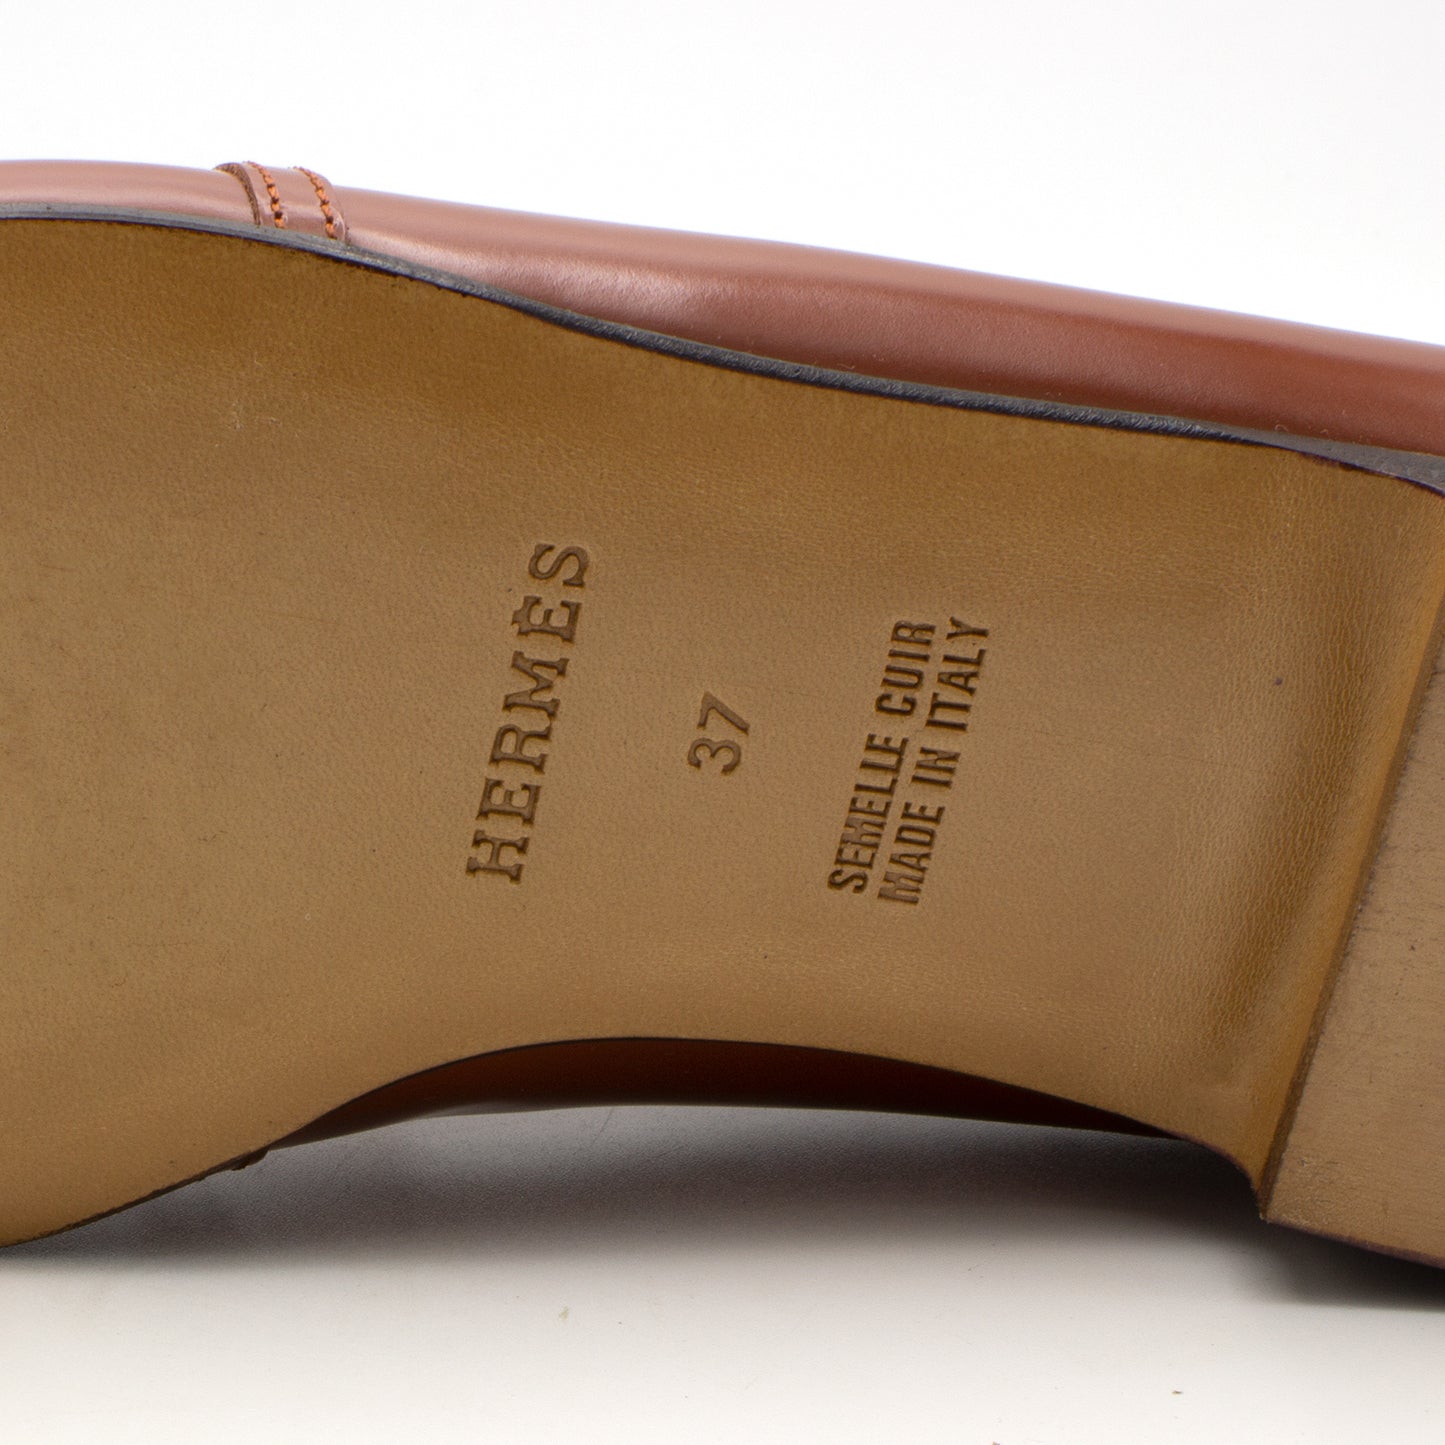 Hermès Monterey shoes